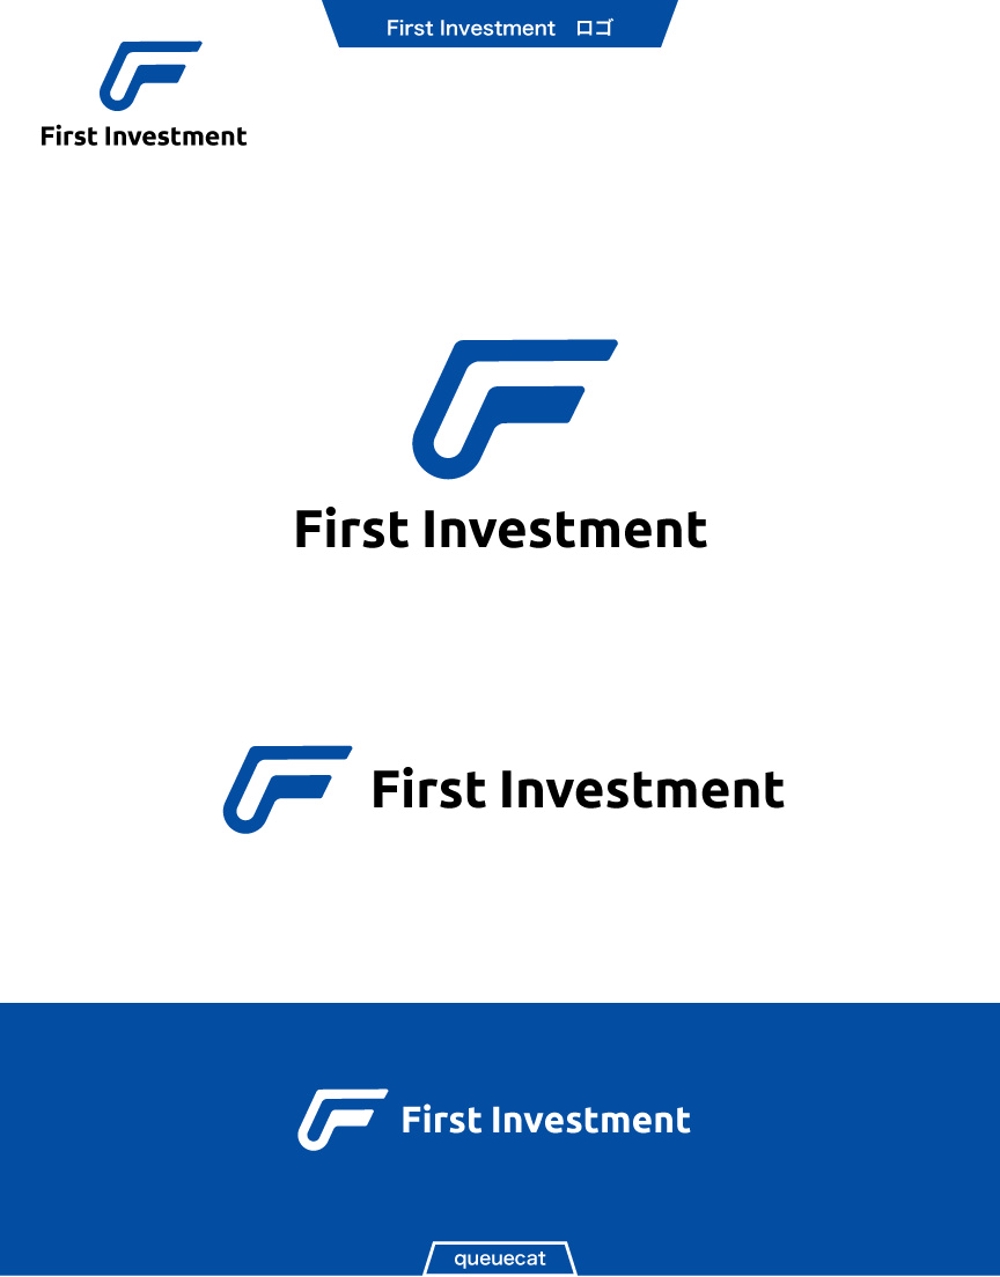 First Investment2_1.jpg